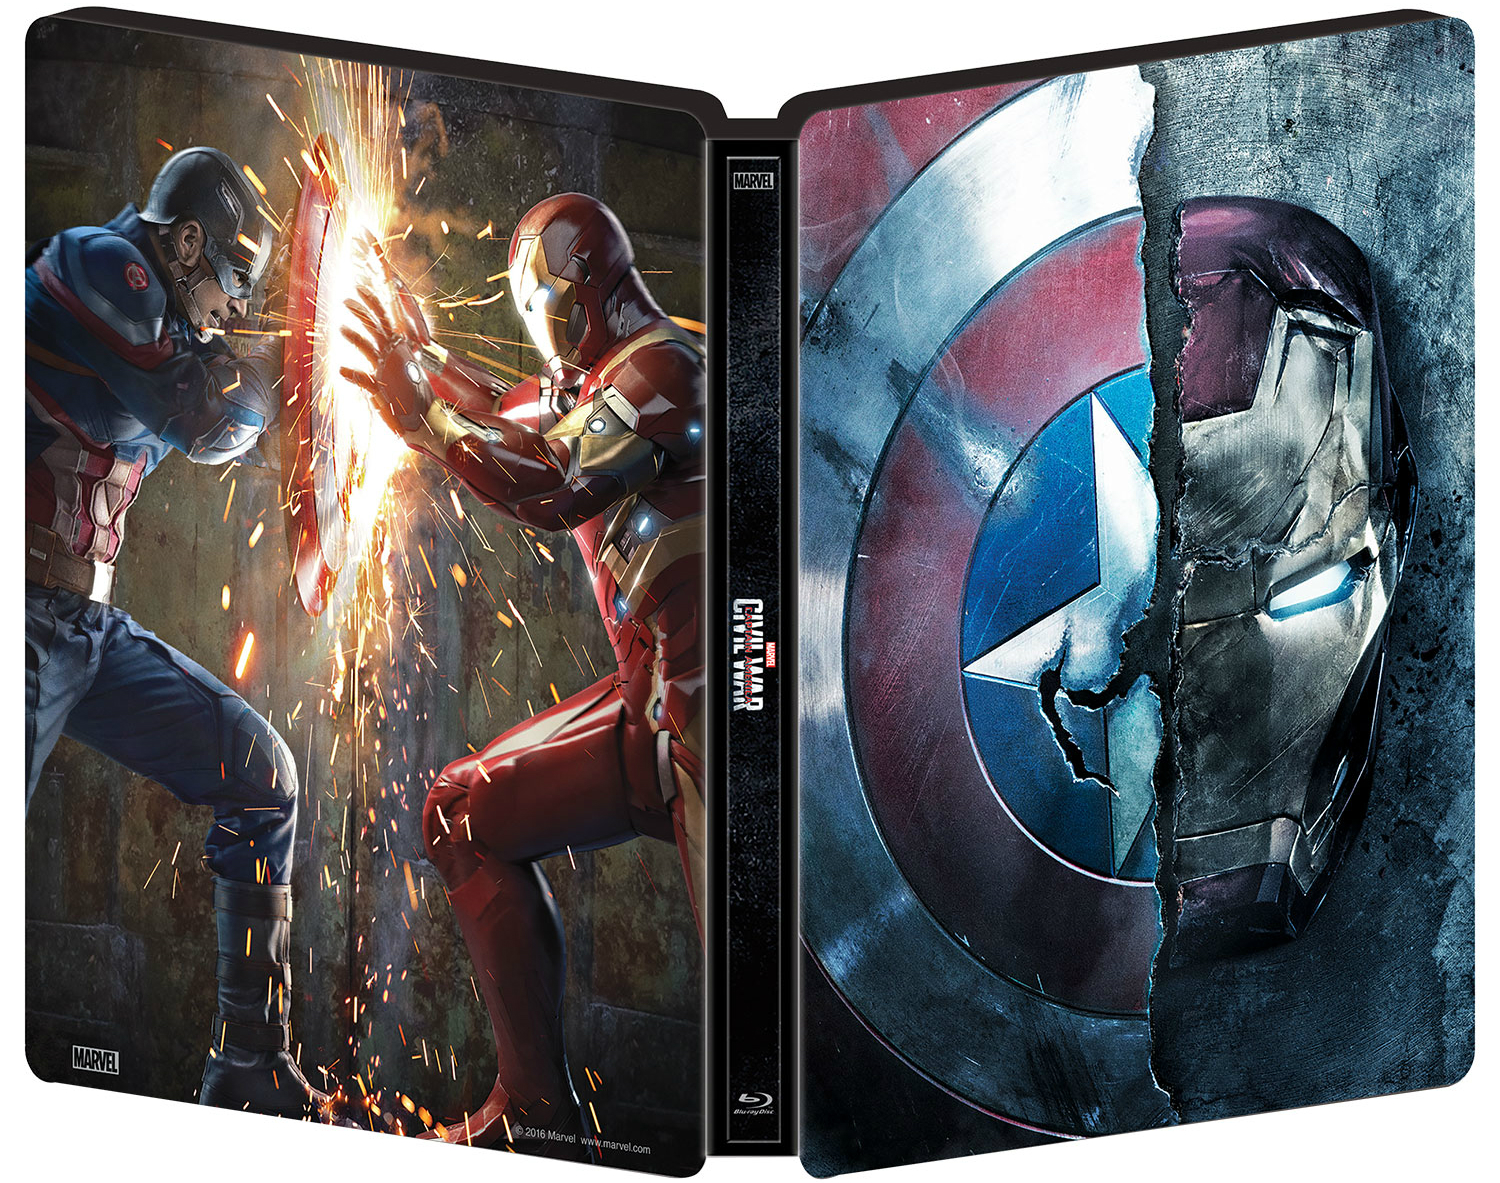 Captain-America-Civil-War-SteelBook-outside.jpg